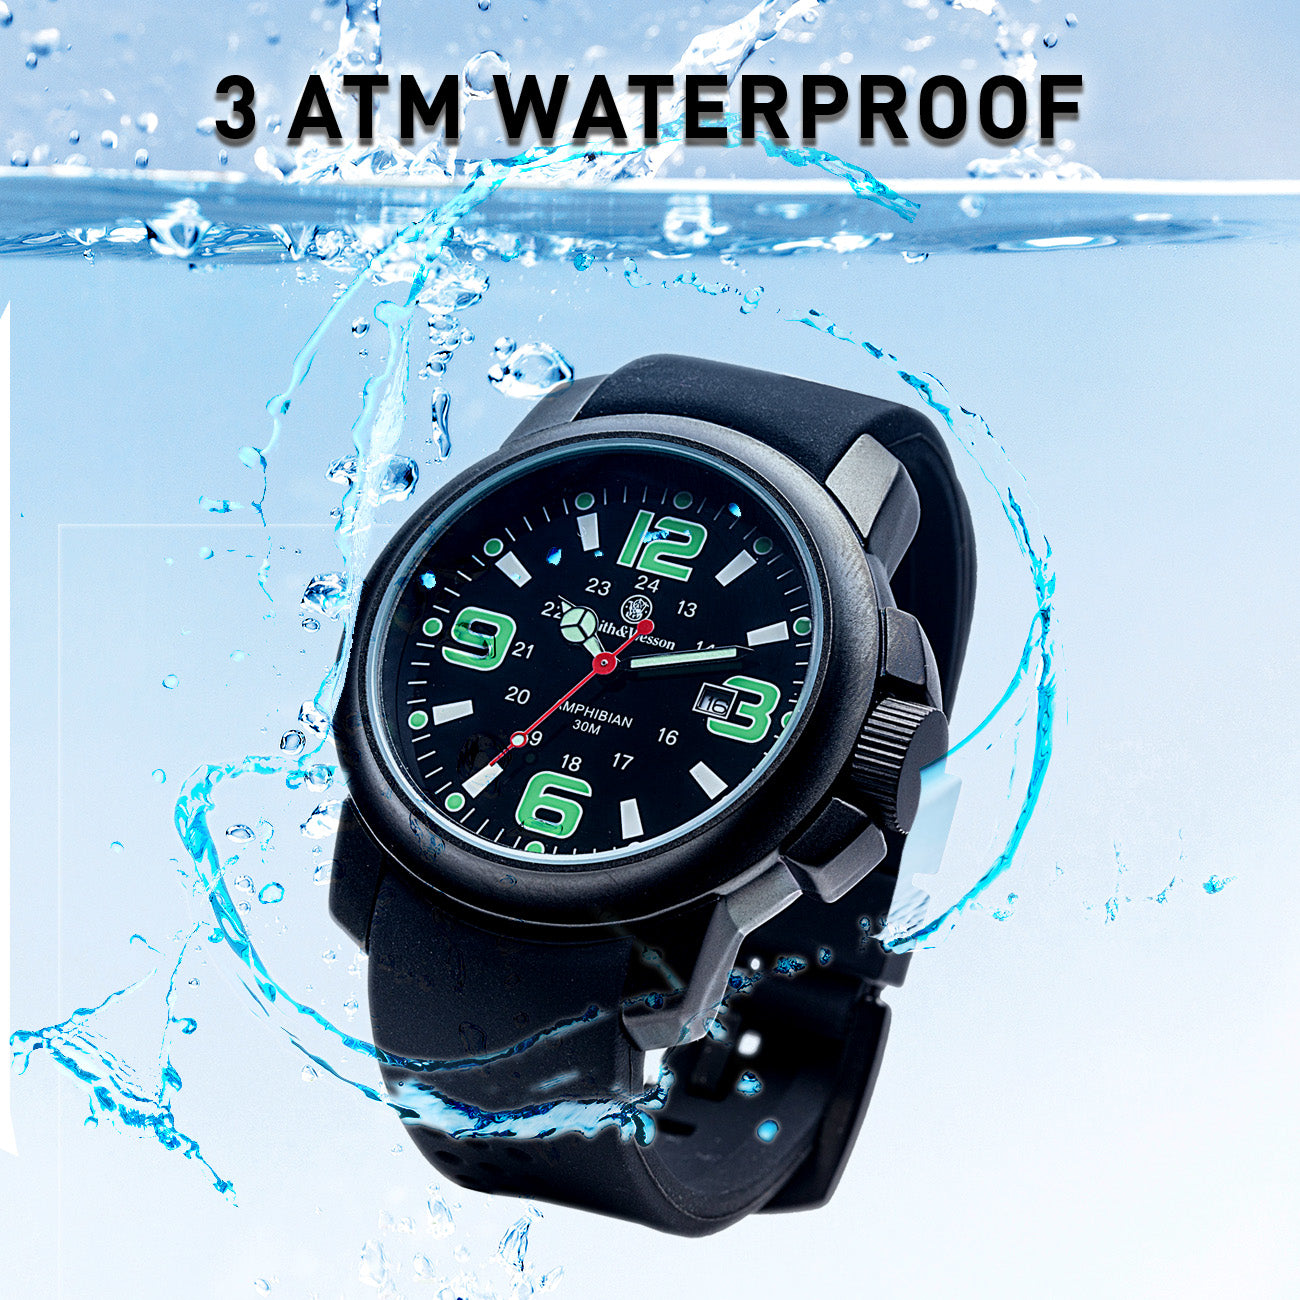 Smith & Wesson Amphibian Commando Watch